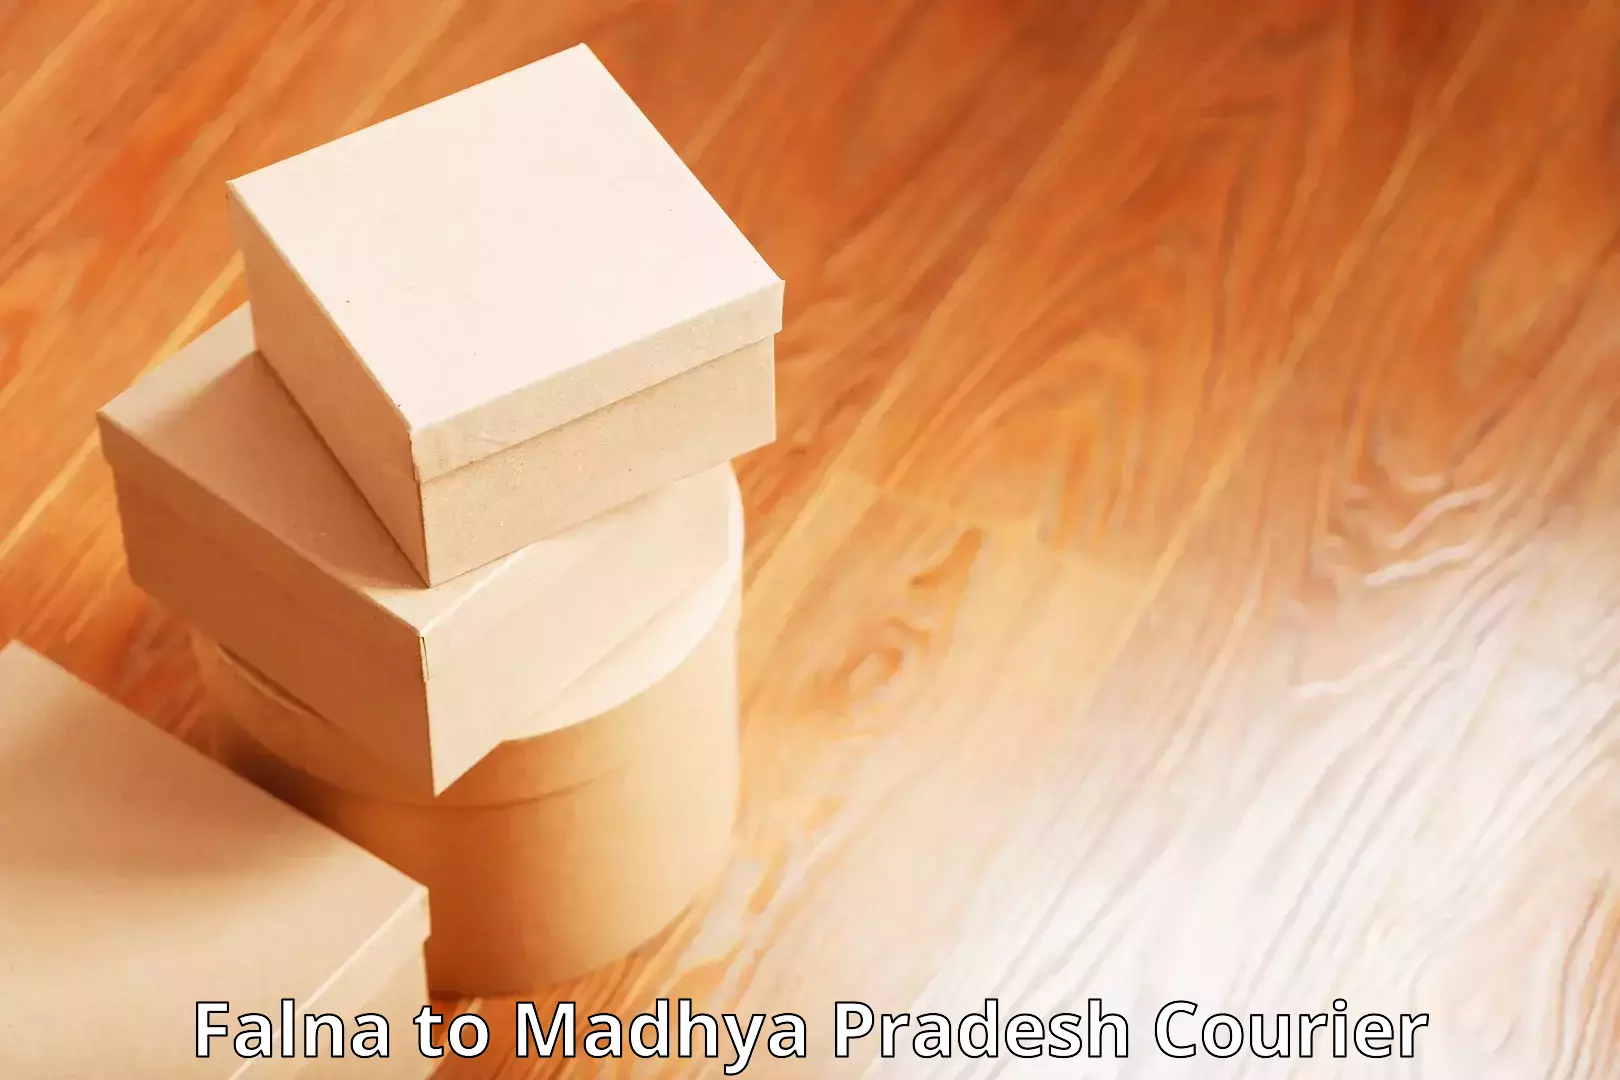 User-friendly courier app Falna to Madhya Pradesh